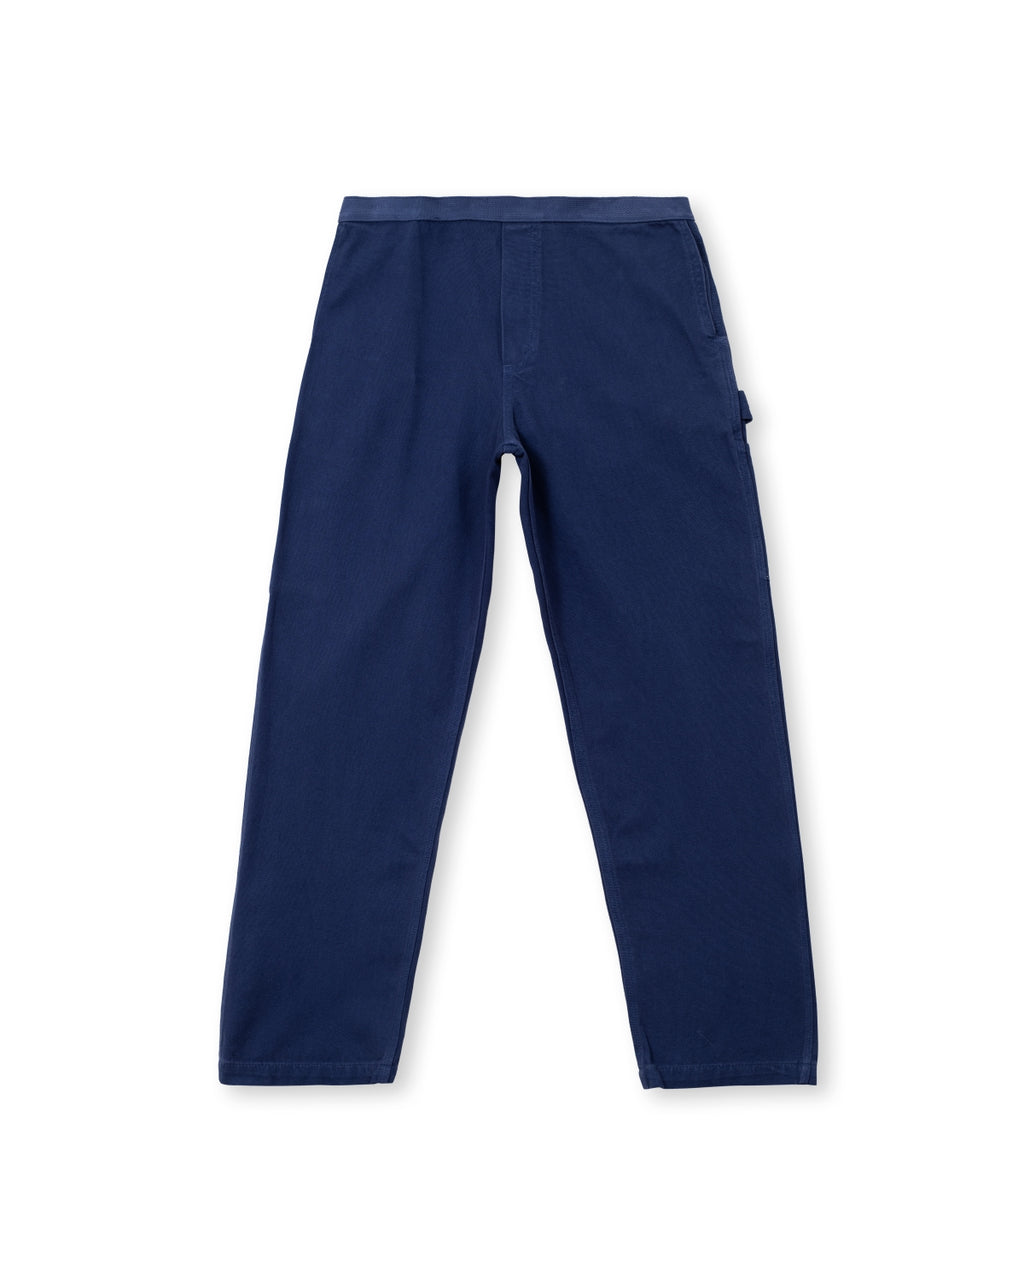 Washed Hard Ware/ Soft Wear Carpenter Pant - Navy